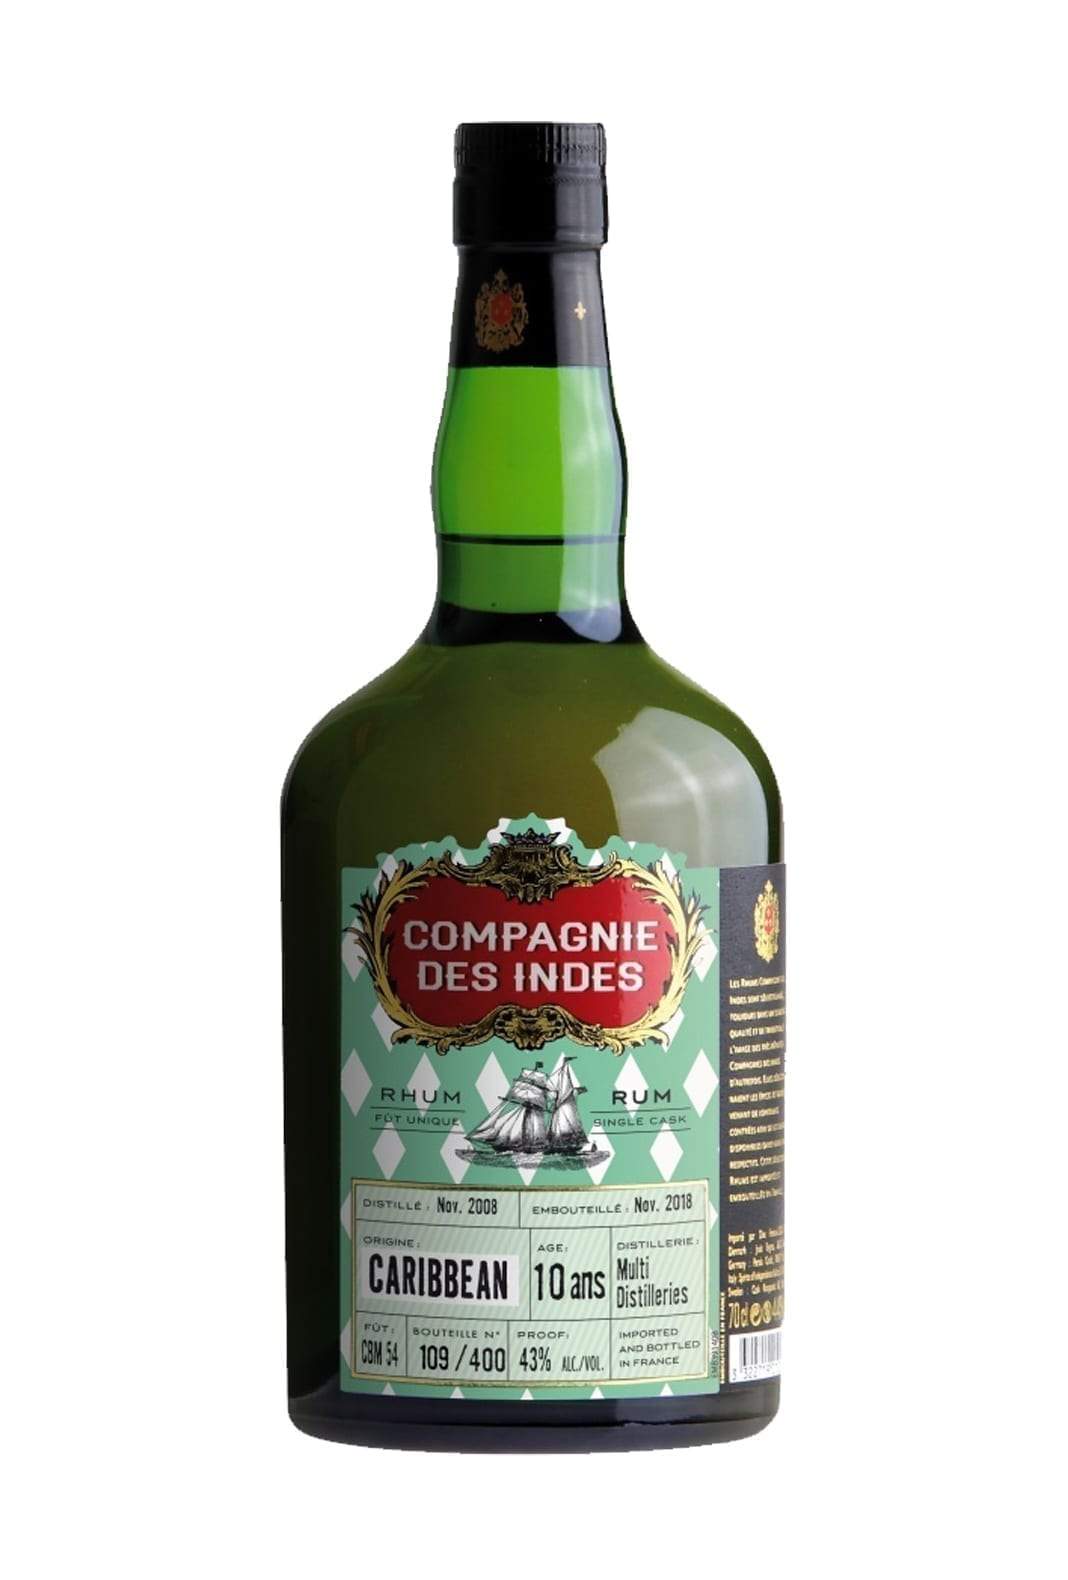 Compagnie des Indes Rum Caribbean 10 years 43% 700ml | Rum | Shop online at Spirits of France